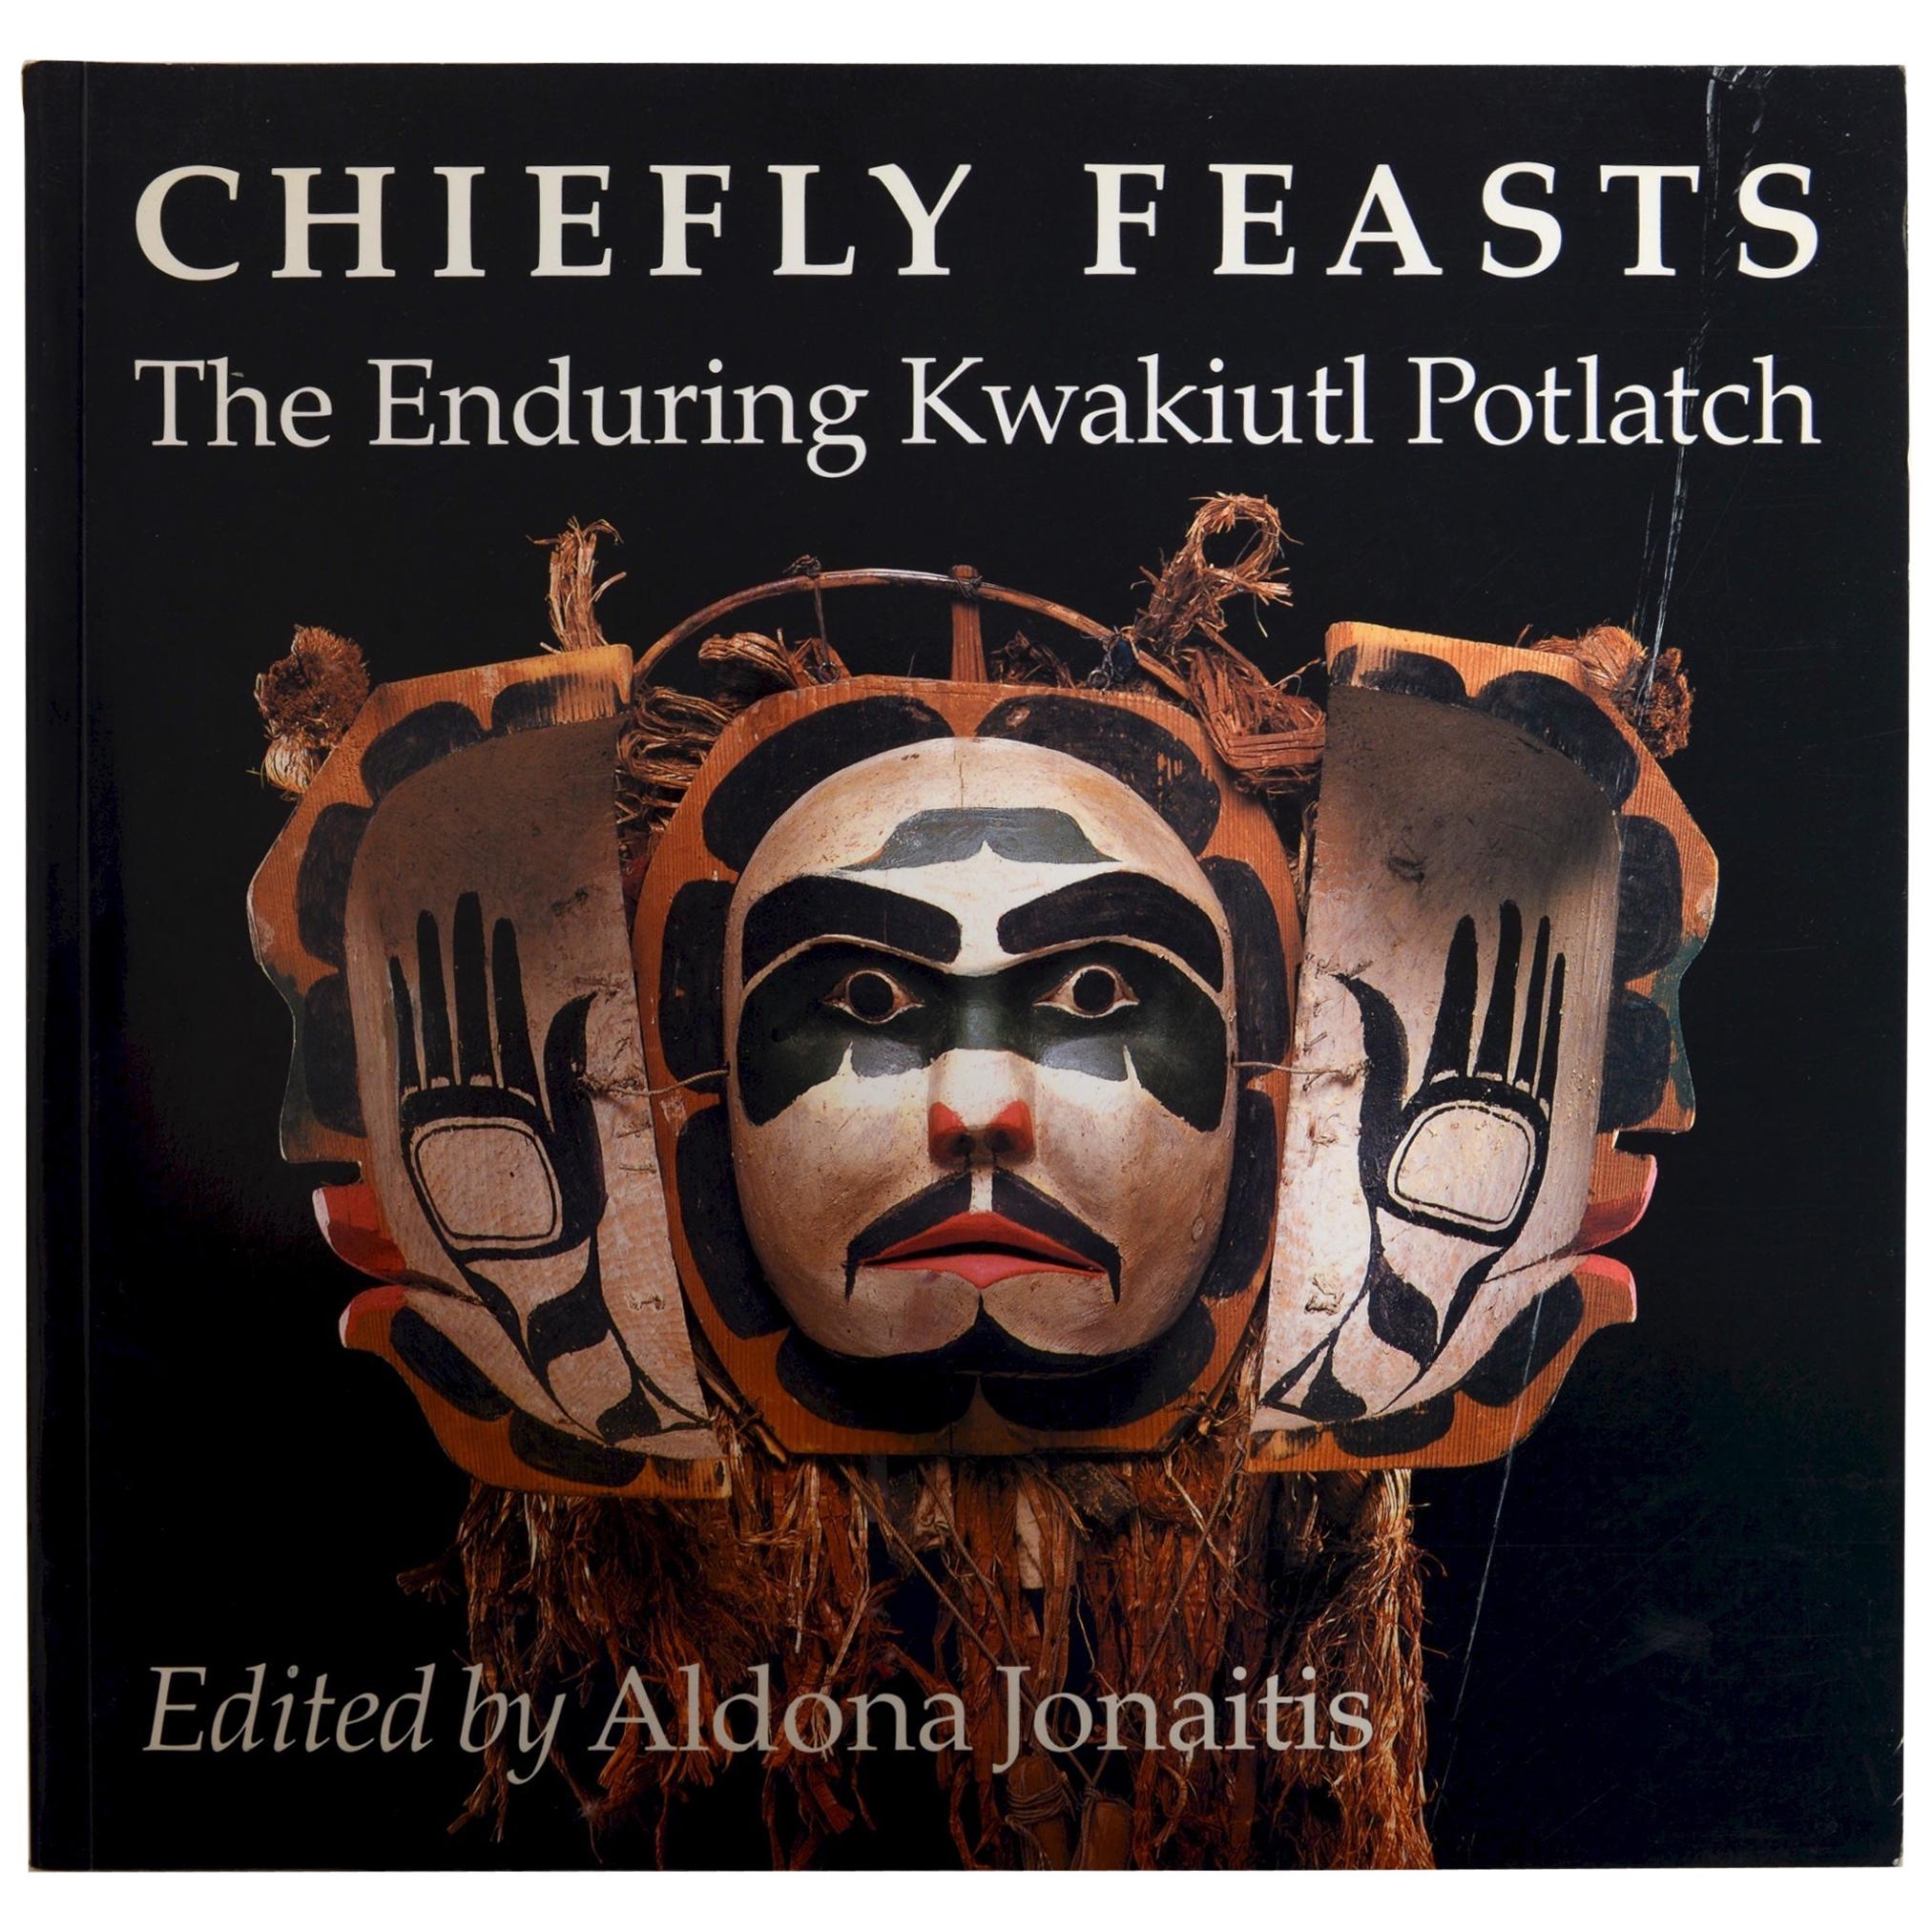 Chiefly Feasts The Enduring Kwakiutl Potlatch by Aldona Jonaitis, 1st Ed